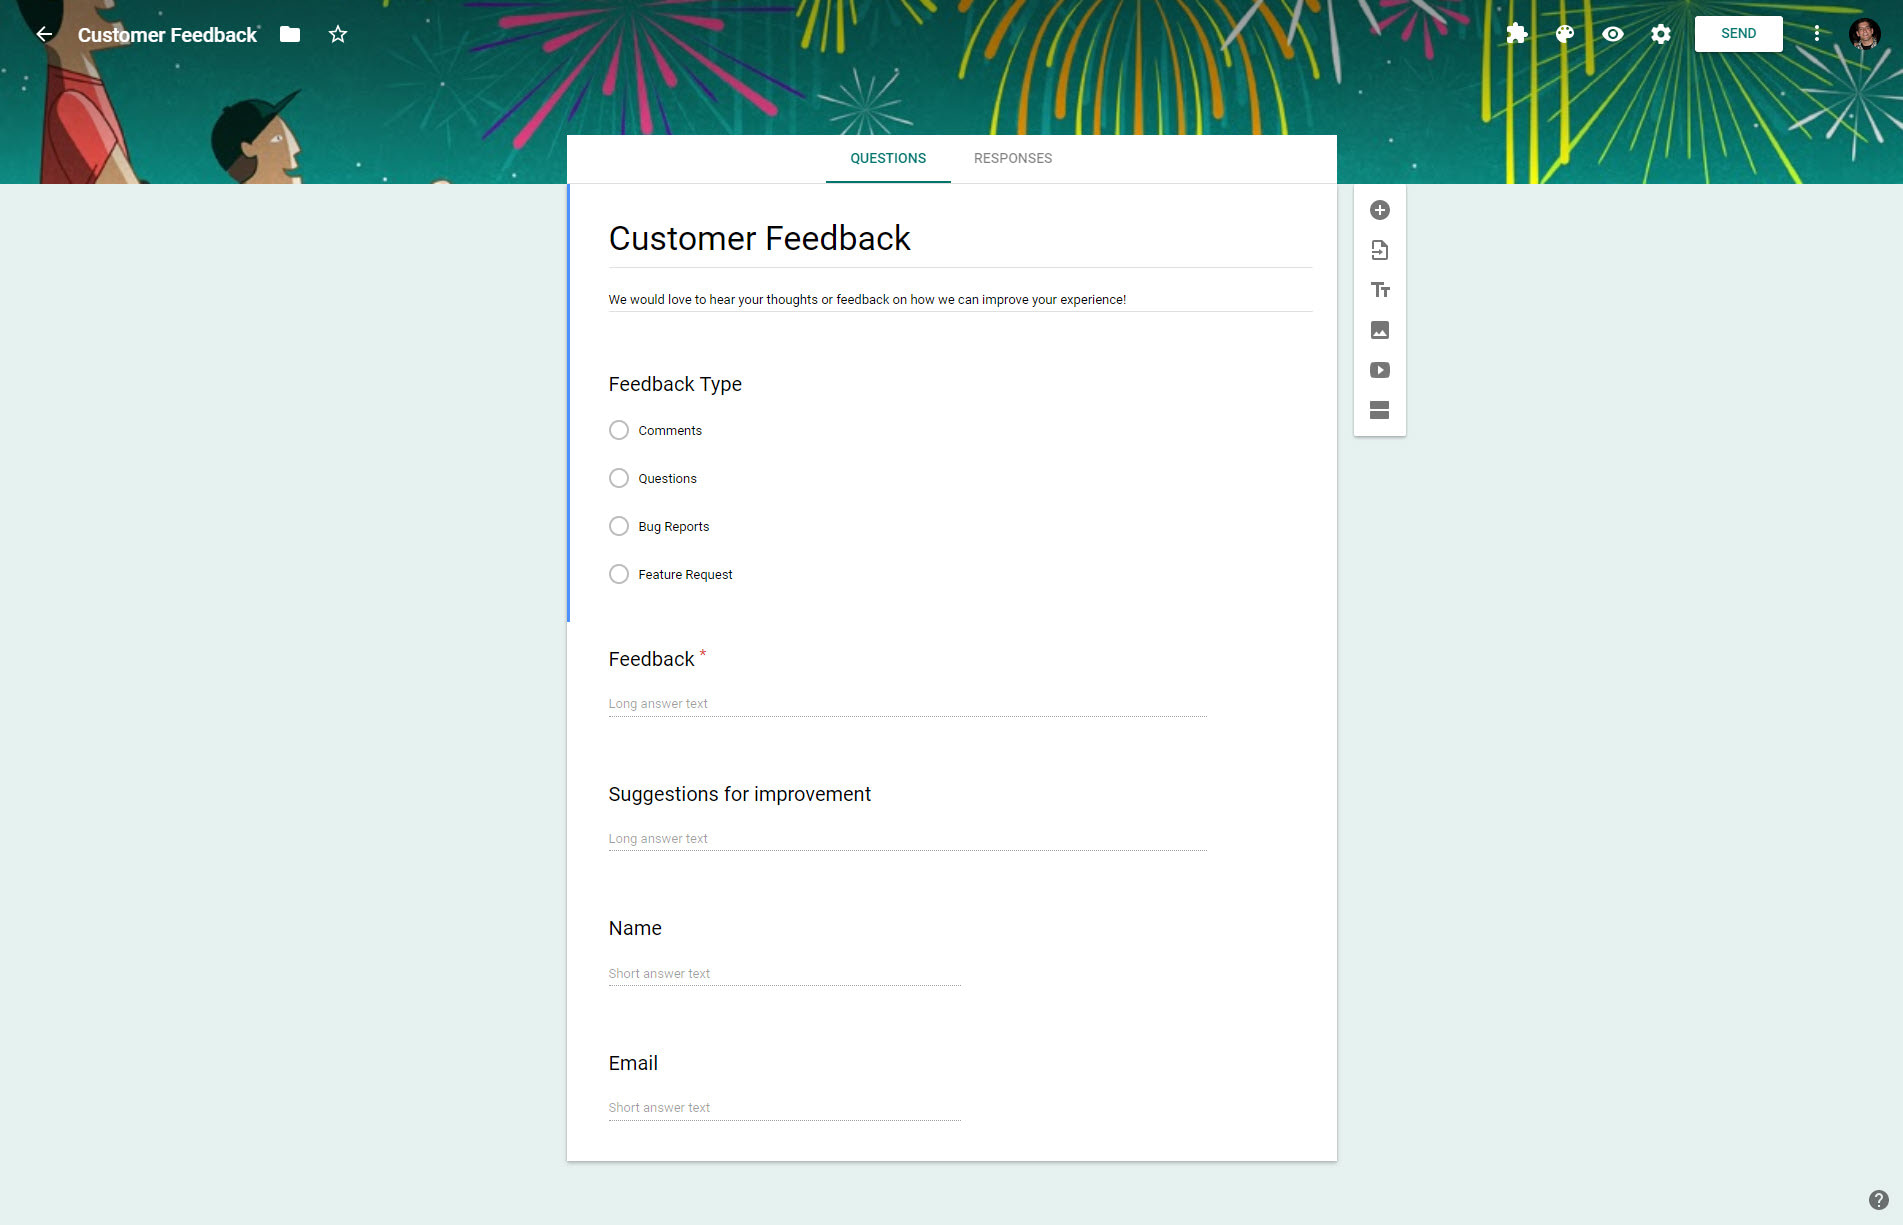 The default customer feedback template